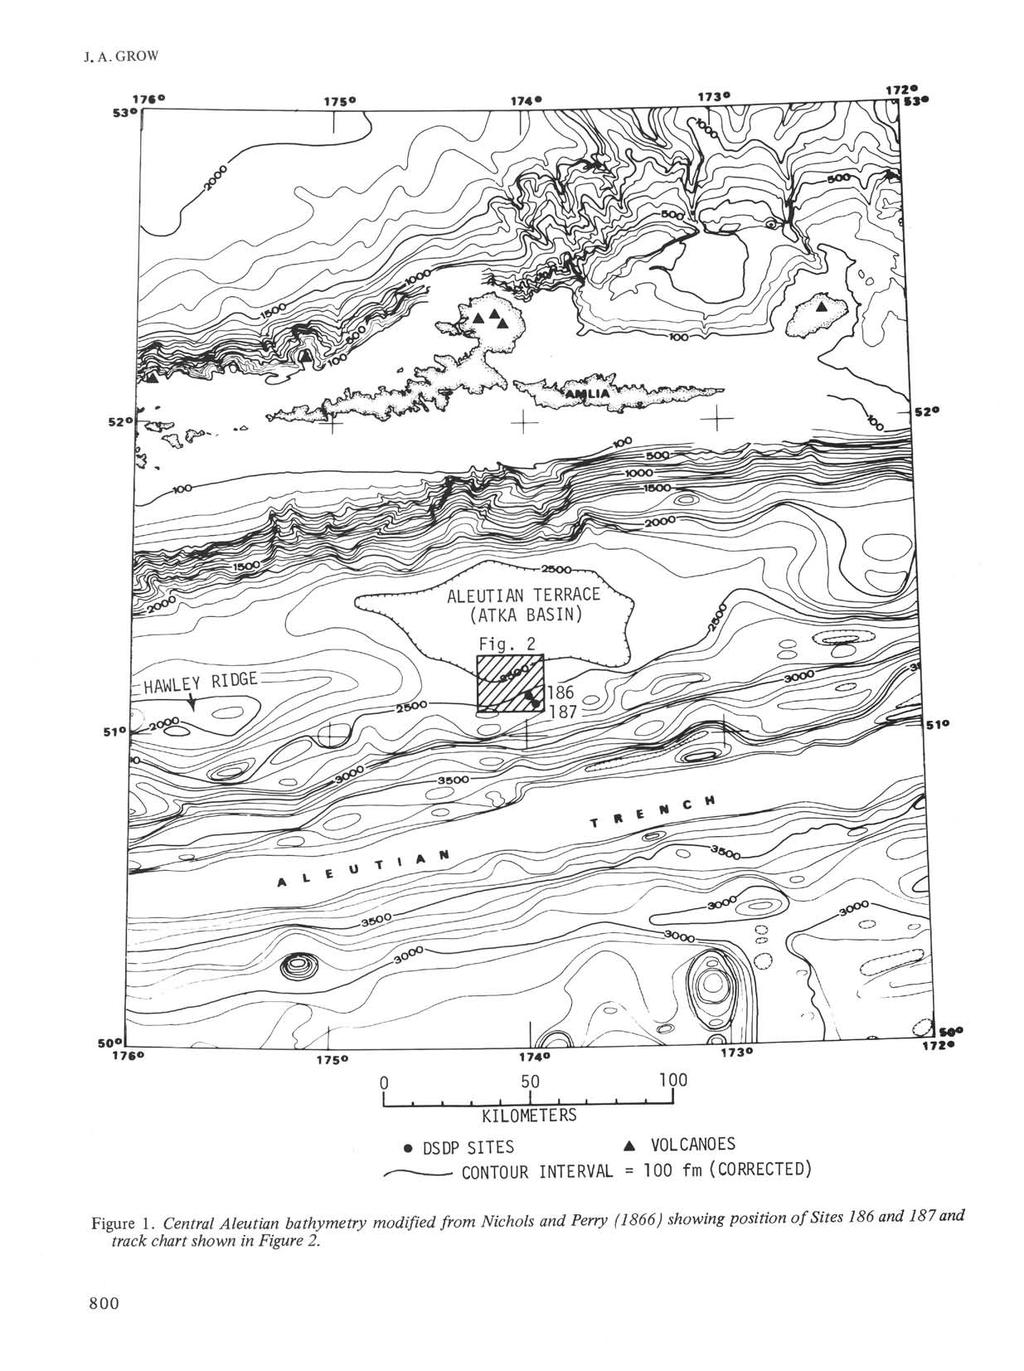 ALEUTIAN TERRACE (ATKA BASIN) 50 176 KILOMETERS DSDP SITES A VOLCANOES CONTOUR INTERVAL = 100 fm (CORRECTED) Figure 1.